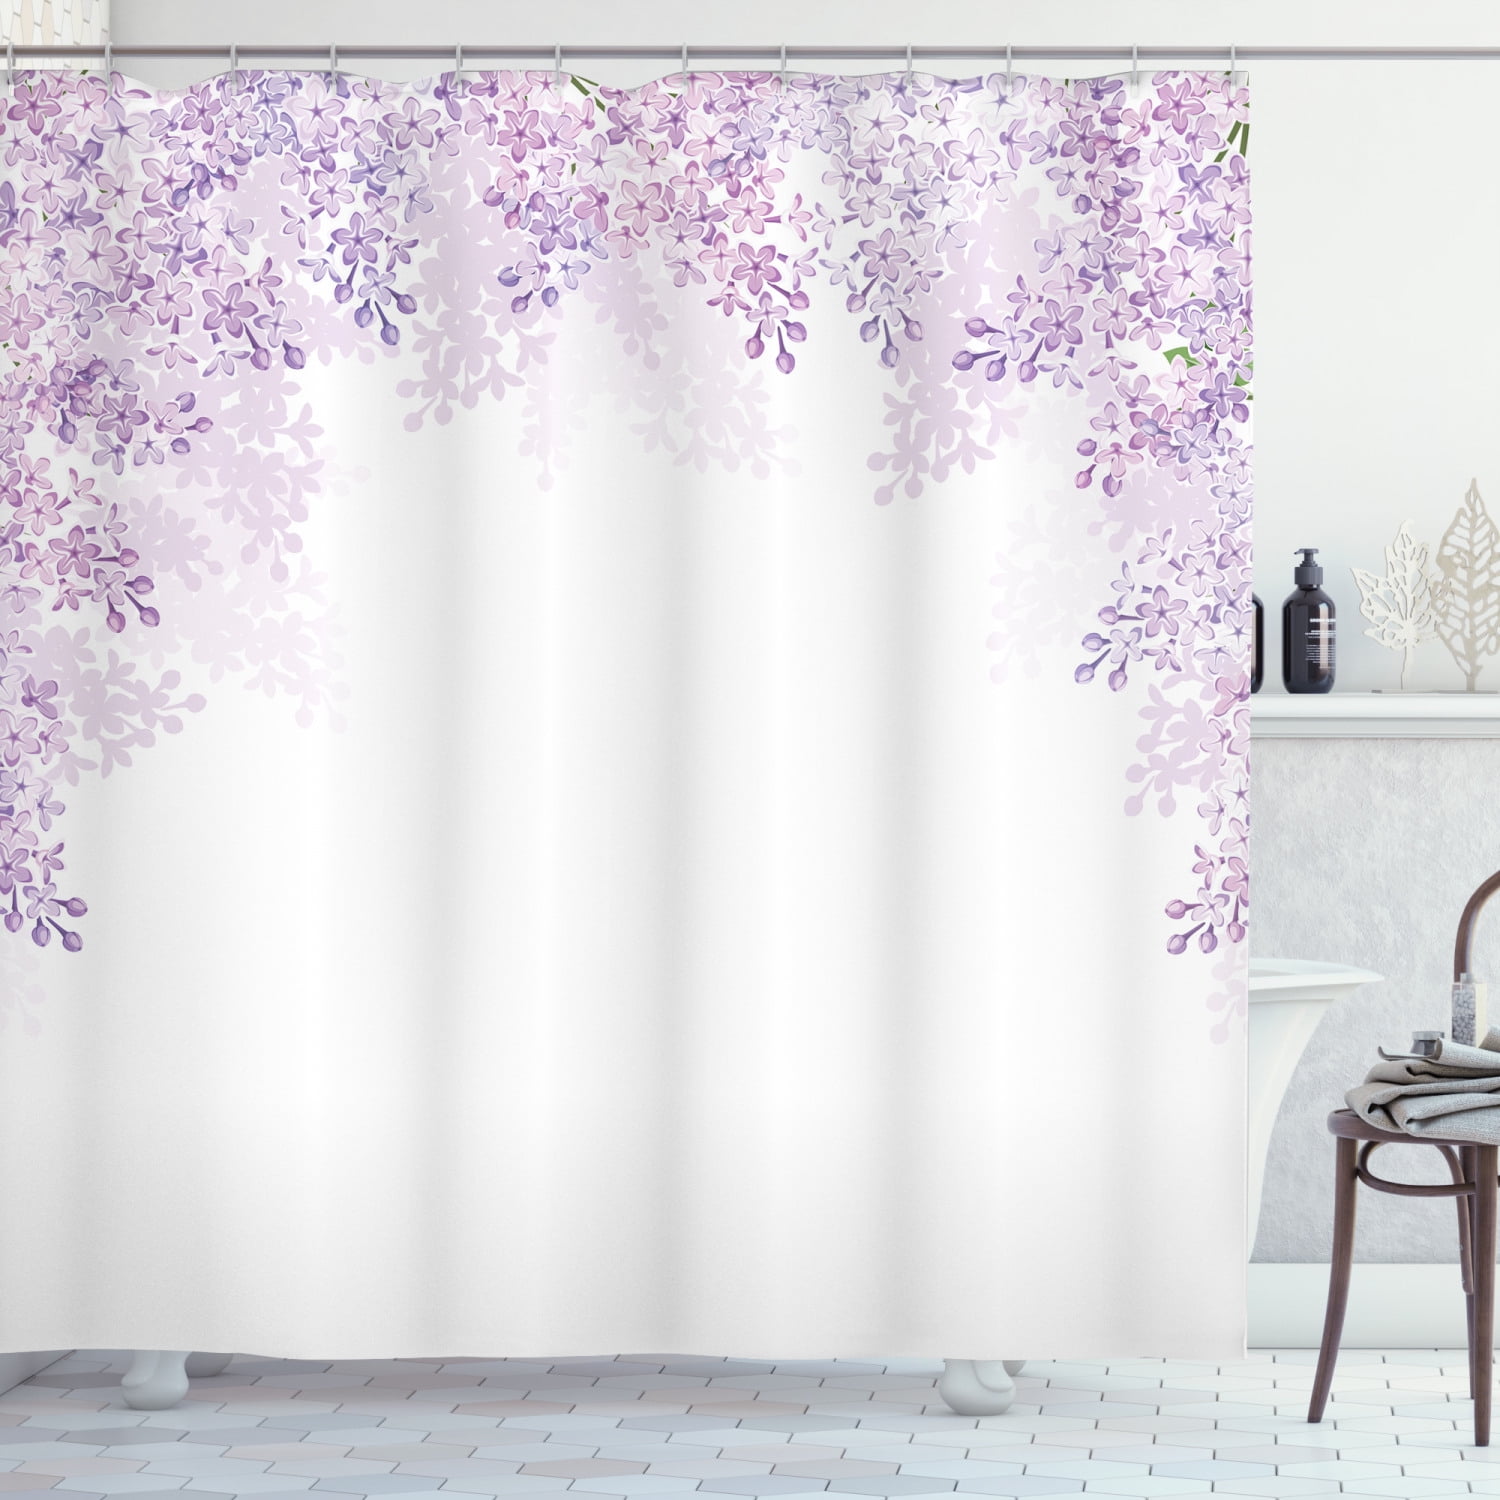 Waterproof Fabric Purple Lavender Shower Curtain Liner Bathroom Decor Set Hooks 